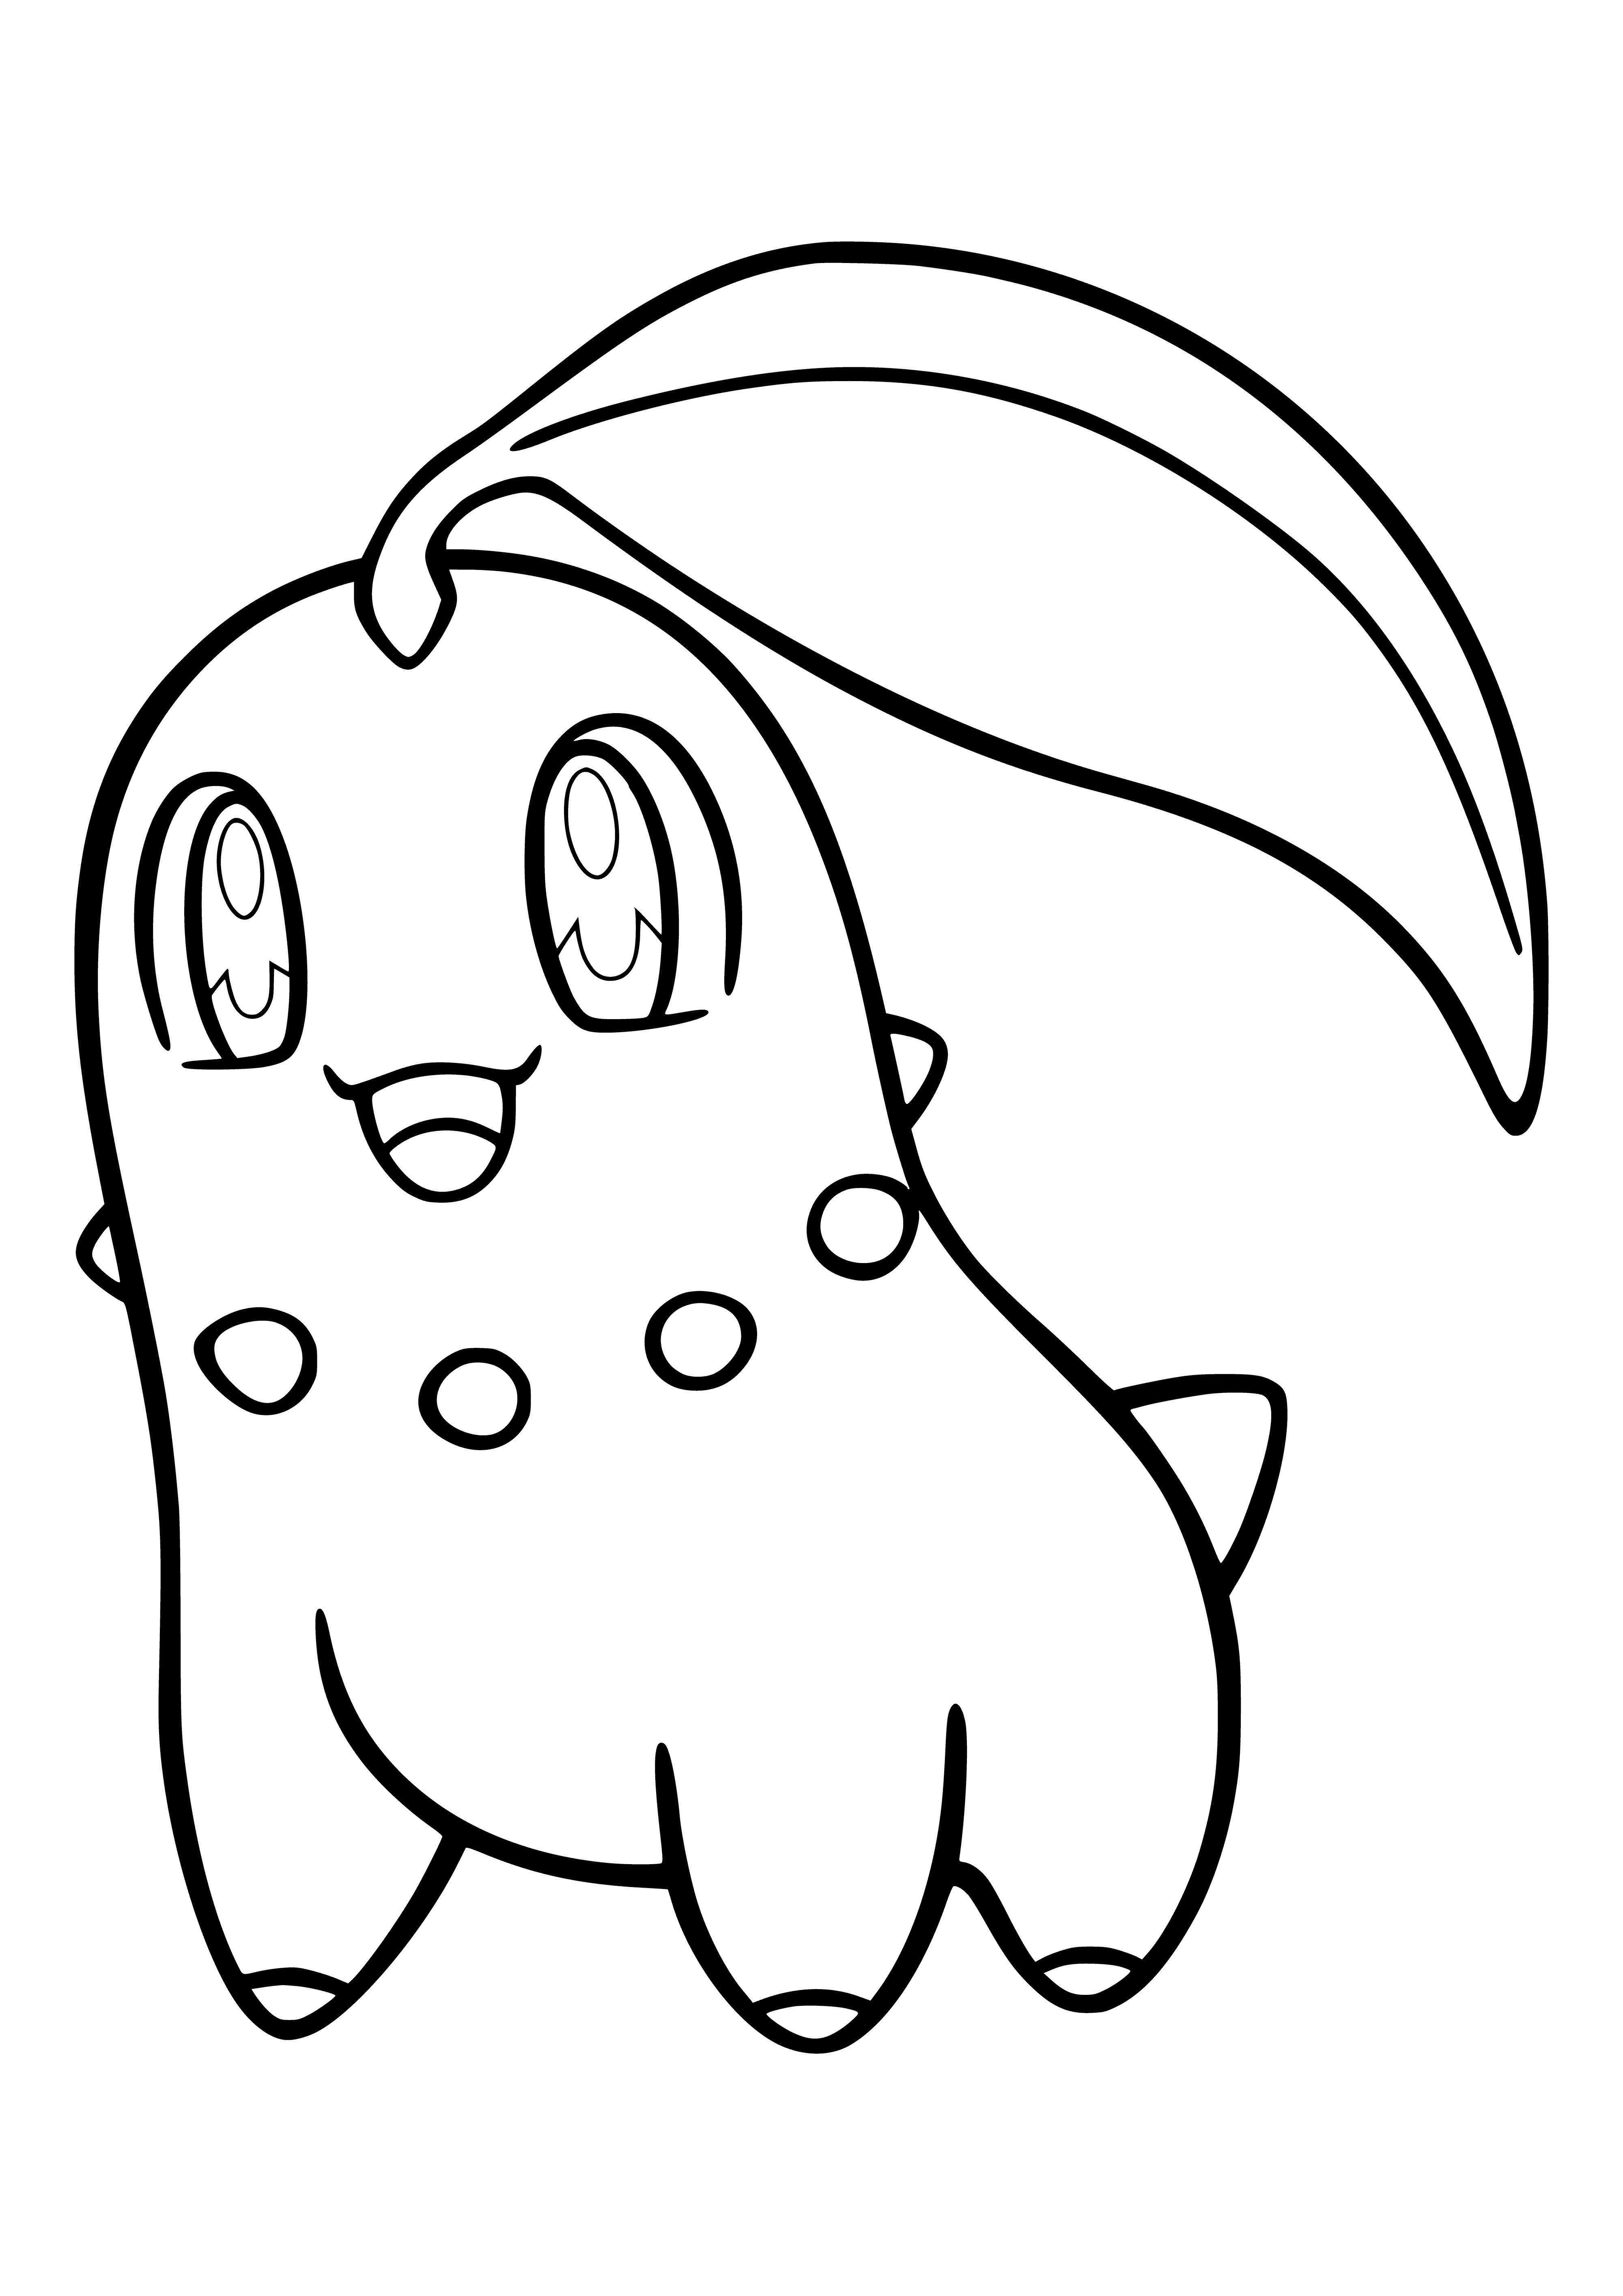 Pokemon Chicory coloring page